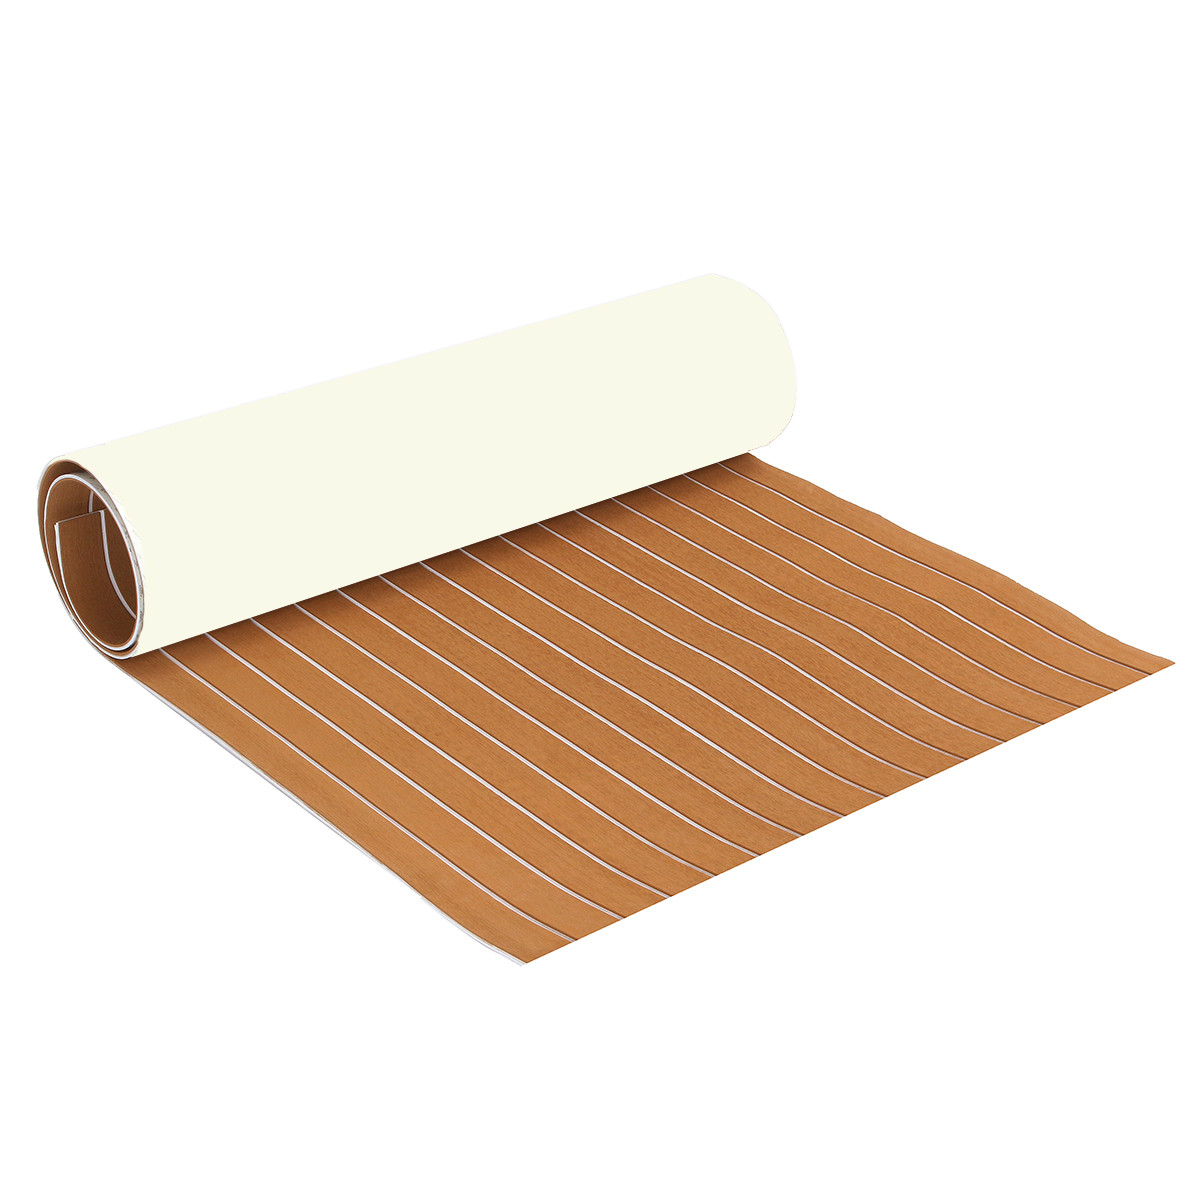 Brown-and-White-Striped-EVA-Imitation-Foam-Teak-Luxury-for-Boat-Deck-Rrailer-Cork-Plastic-Wood-Floor-1133190-1